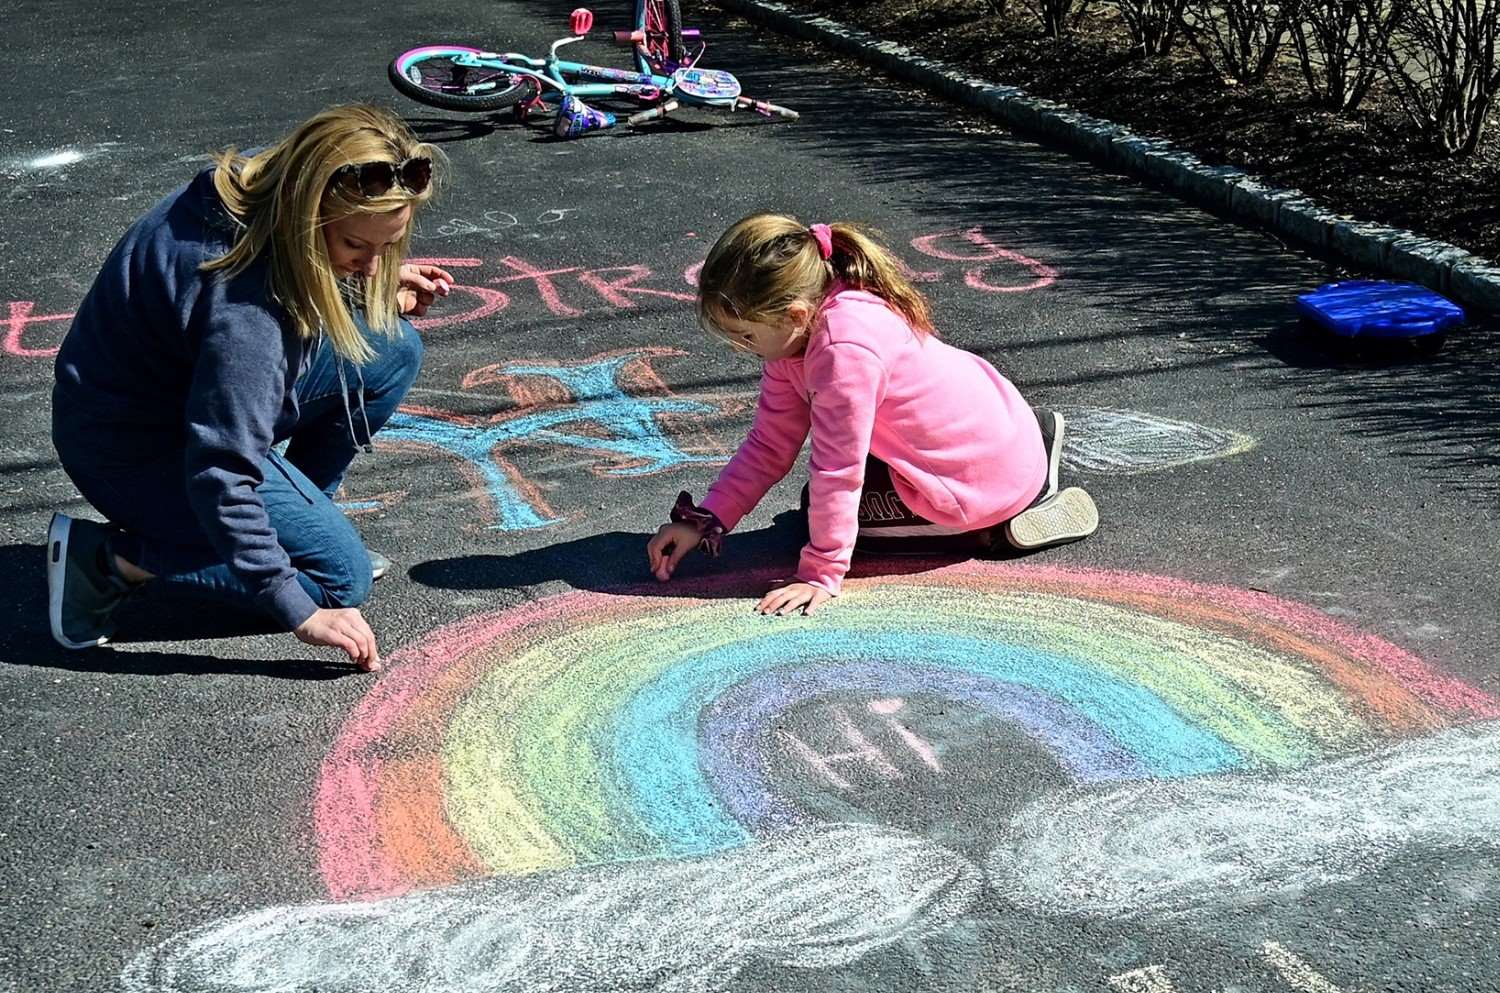 15 Surprising Facts About Sidewalk Chalk Art - Facts.net